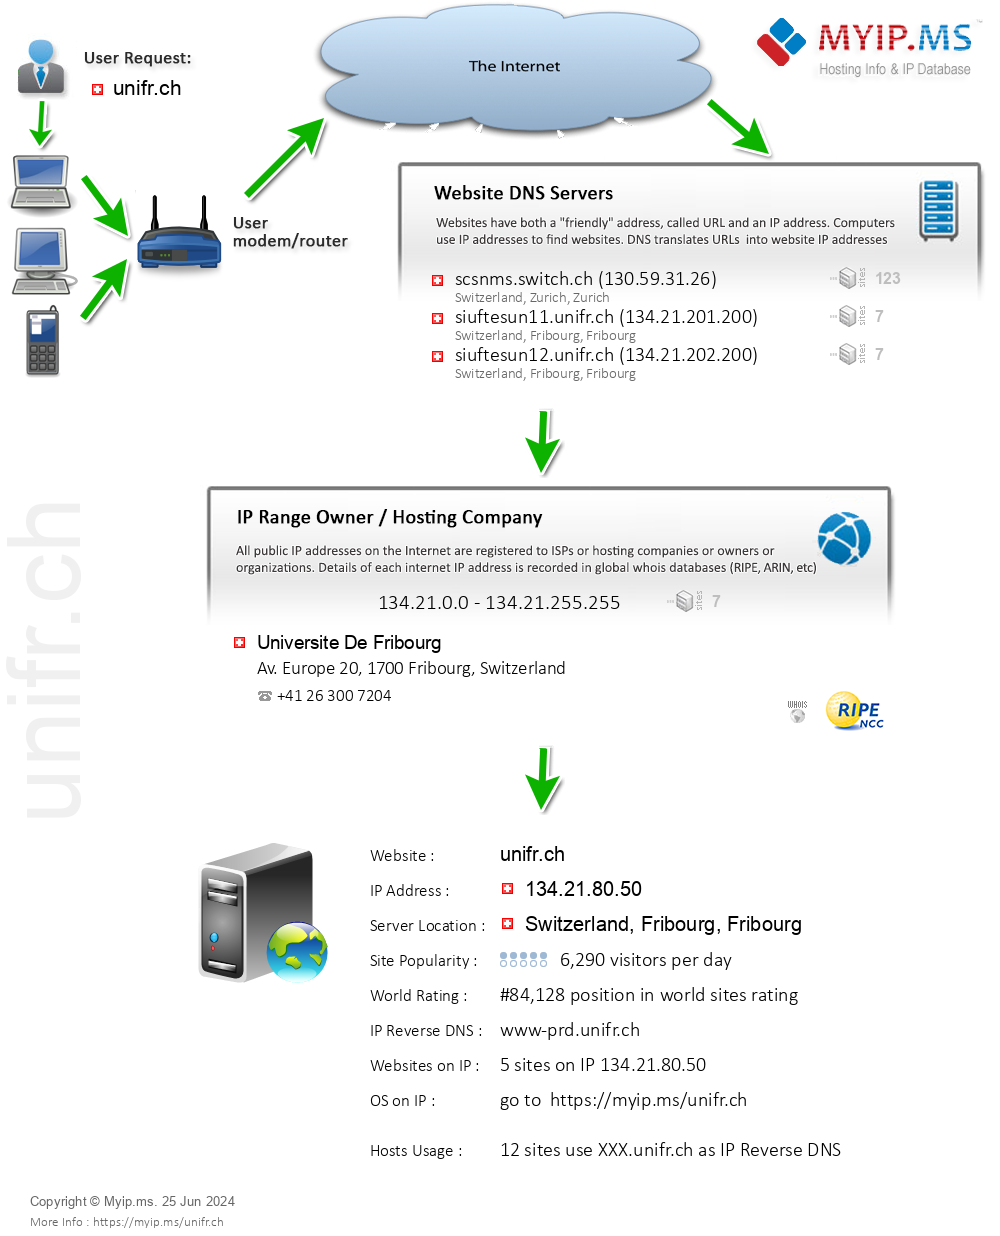 Unifr.ch - Website Hosting Visual IP Diagram